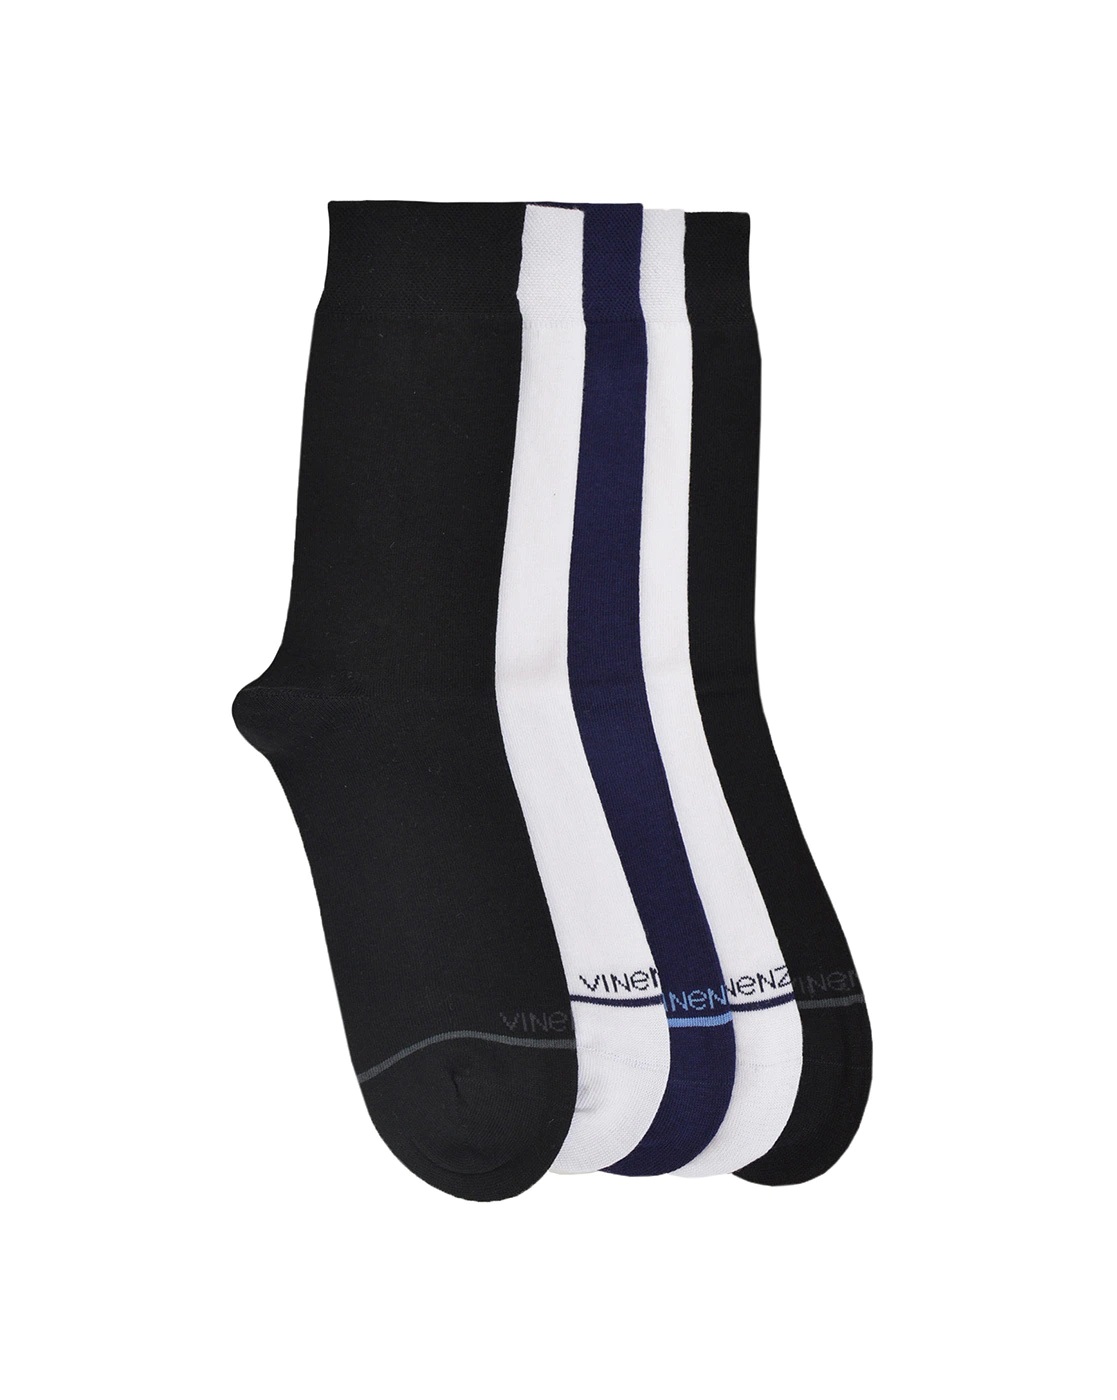 superfine plain formal organic cotton ankle socks